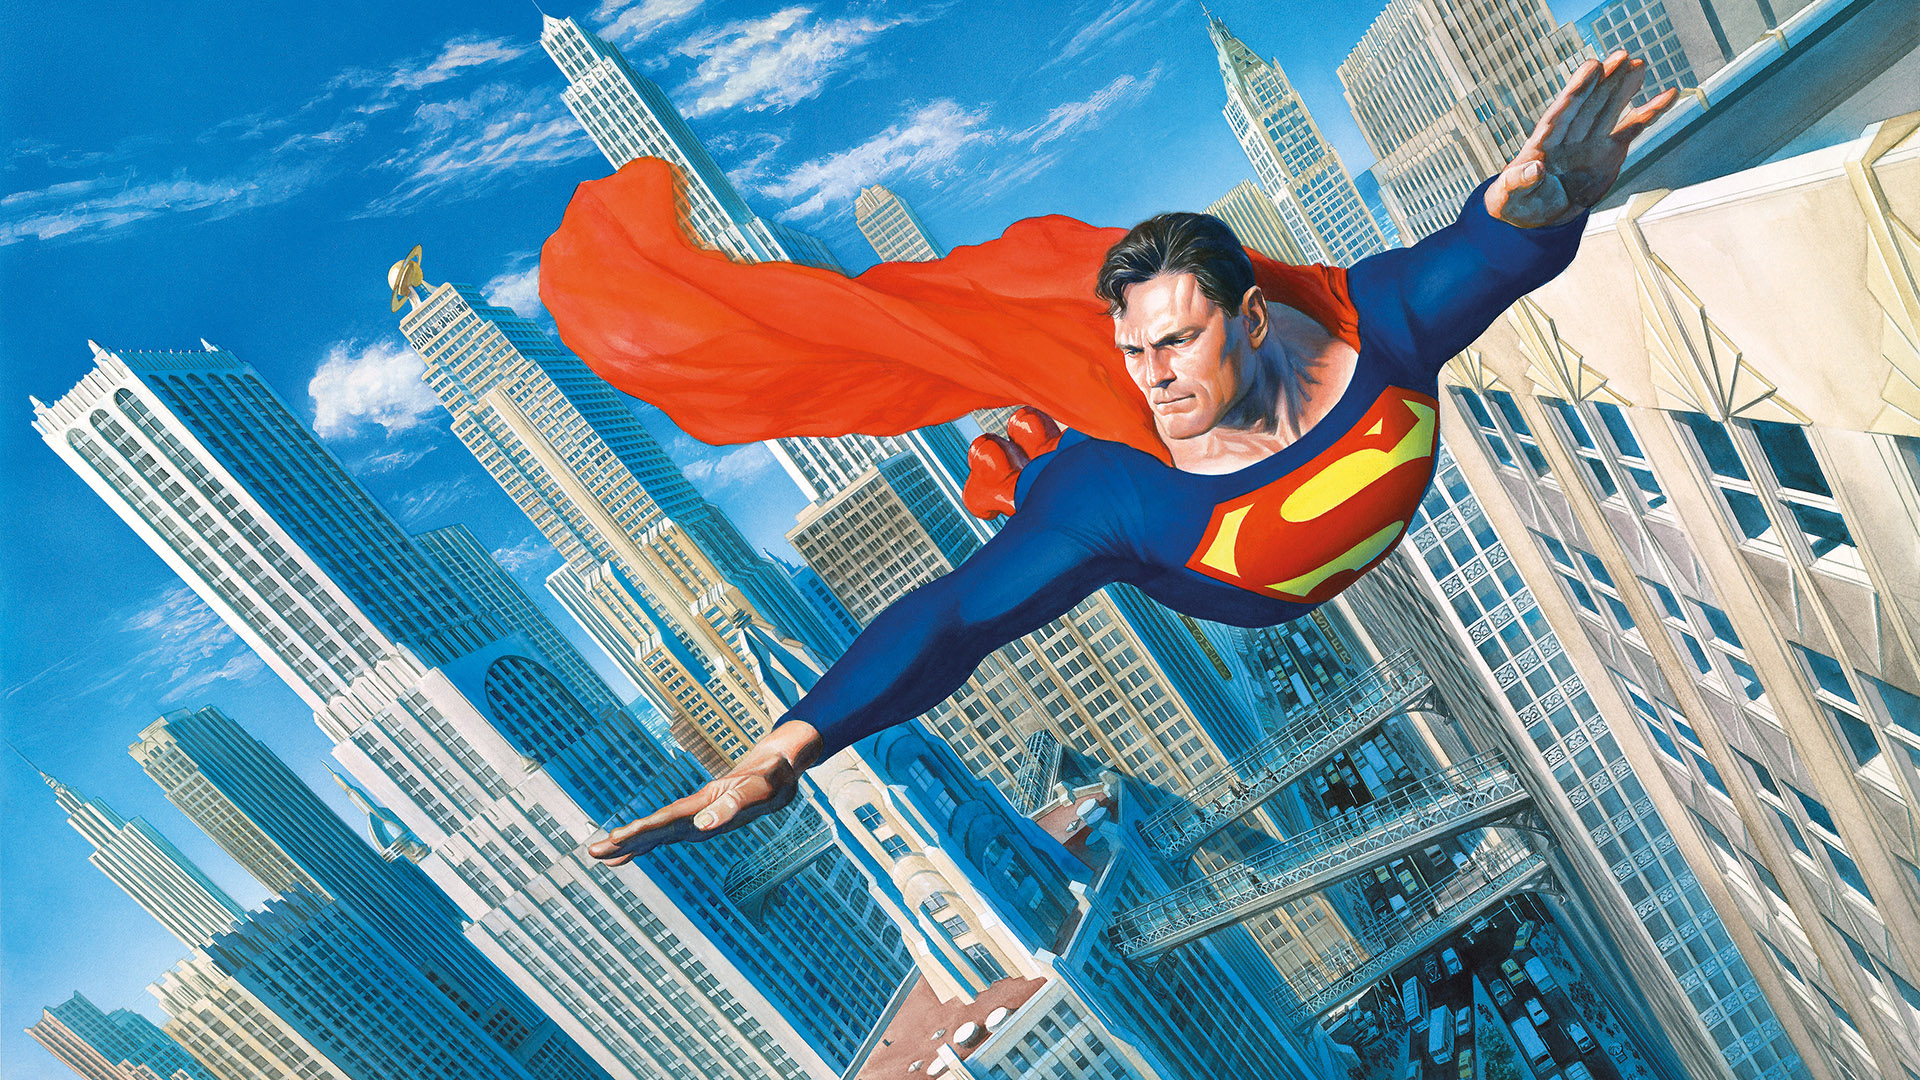 Superman Alex Ross Painting - HD Wallpaper 